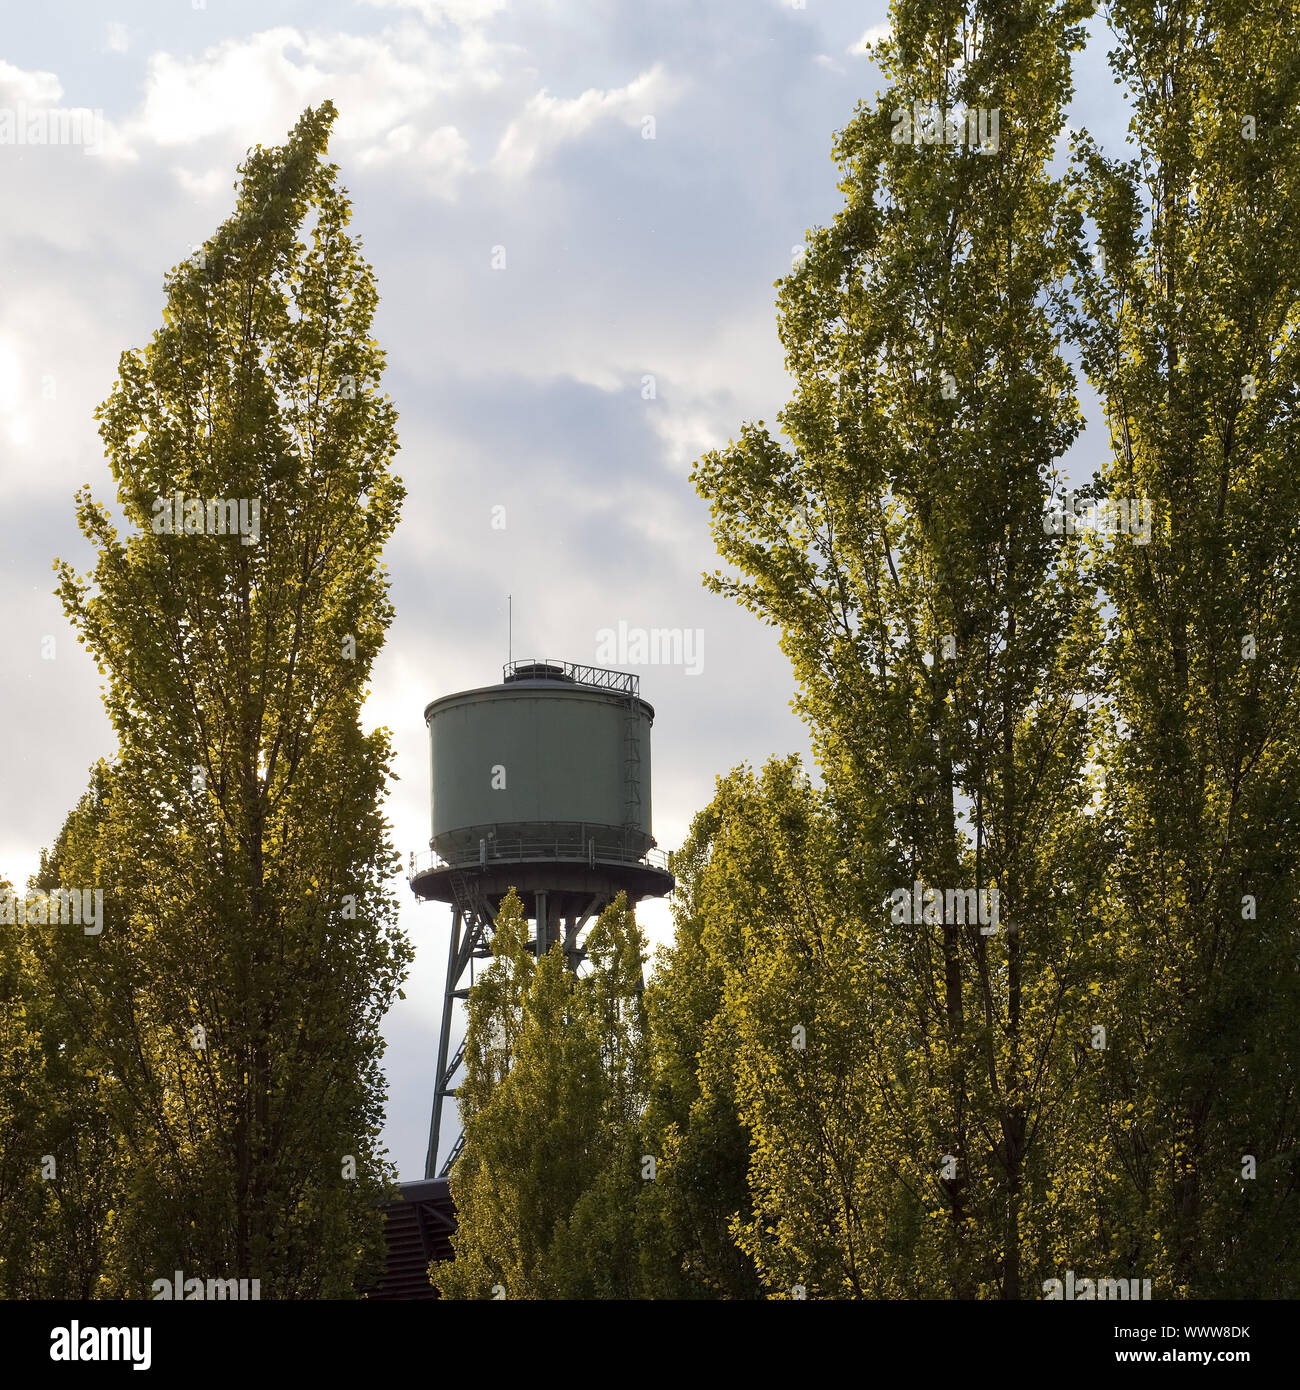 ater tank of  Jahrhunderthalle in Westpark, Bochum, Ruhr Area, Germany, Europe Stock Photo